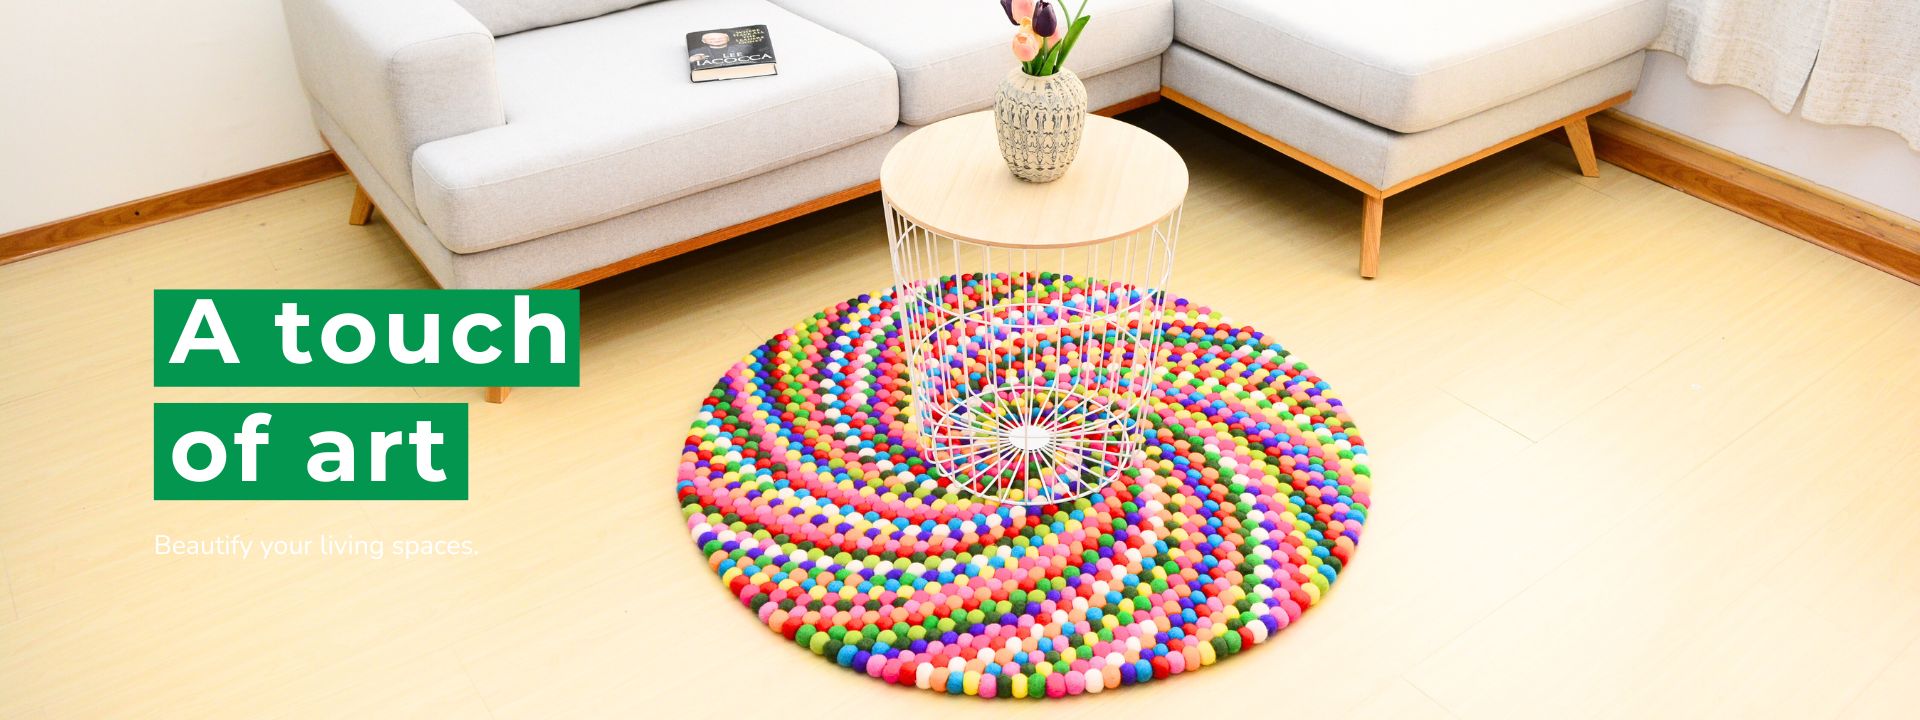 handmade felt wool ball rug